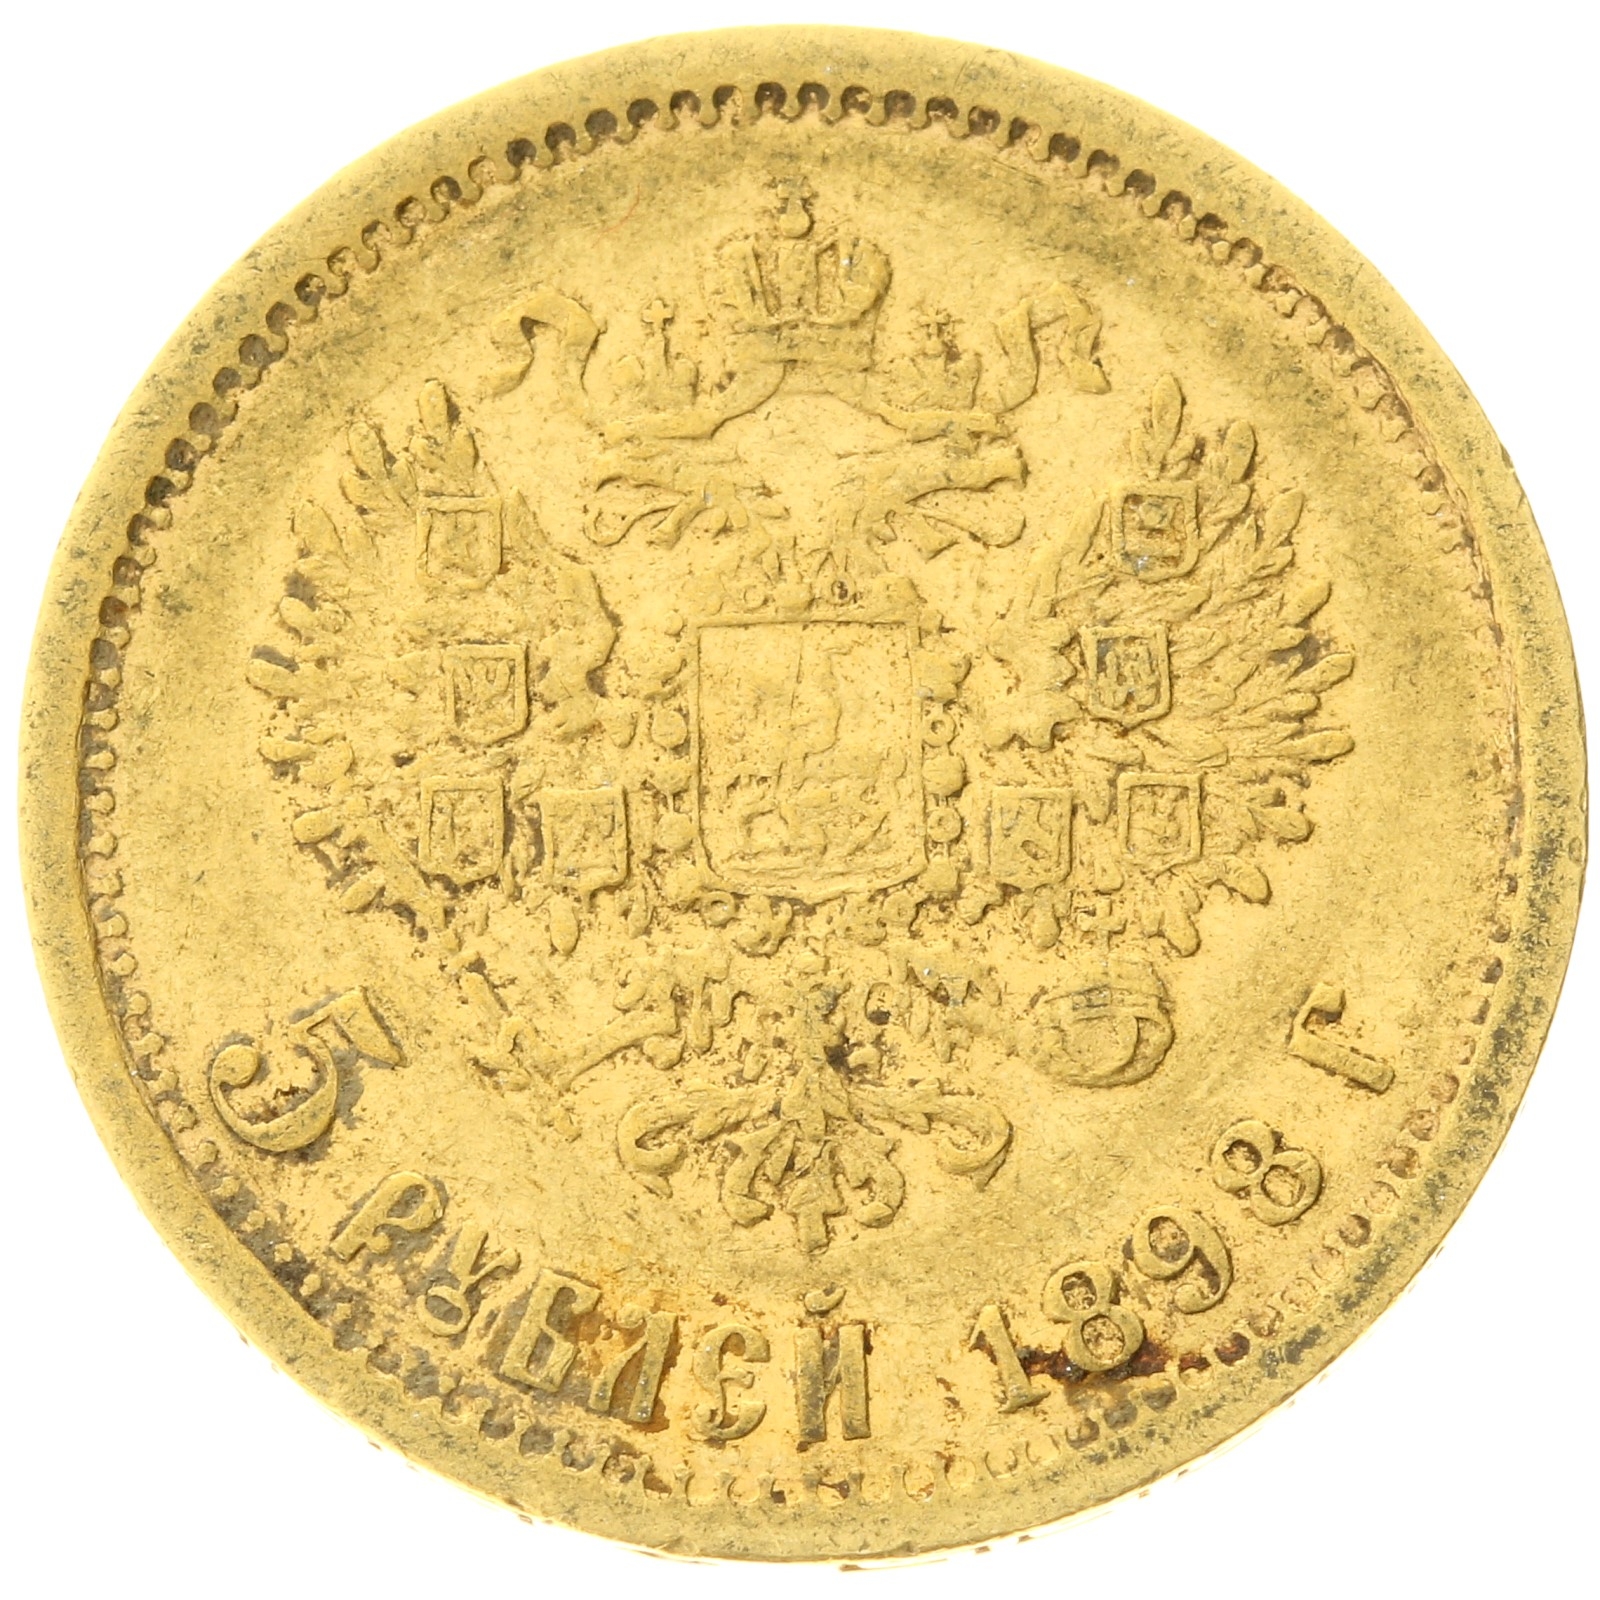 Russia - 5 rubles - 1898 - Nikolai II 